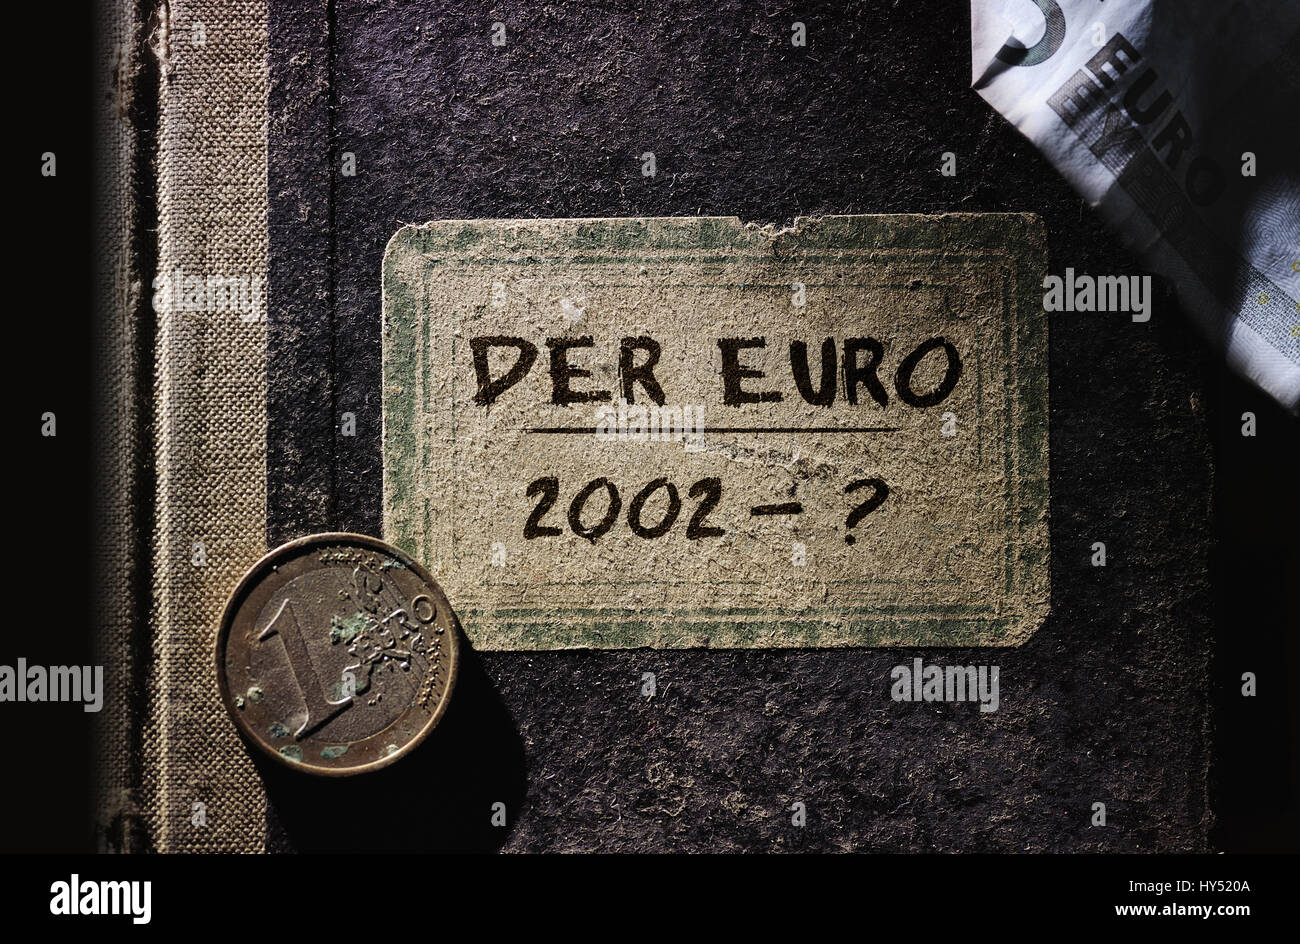 Vecchio libro con etichetta l'euro - nel 2002 - ?, eurocrisis, Altes Buch mit der Aufschrift Euro - 2002 - ?, Eurokrise Foto Stock